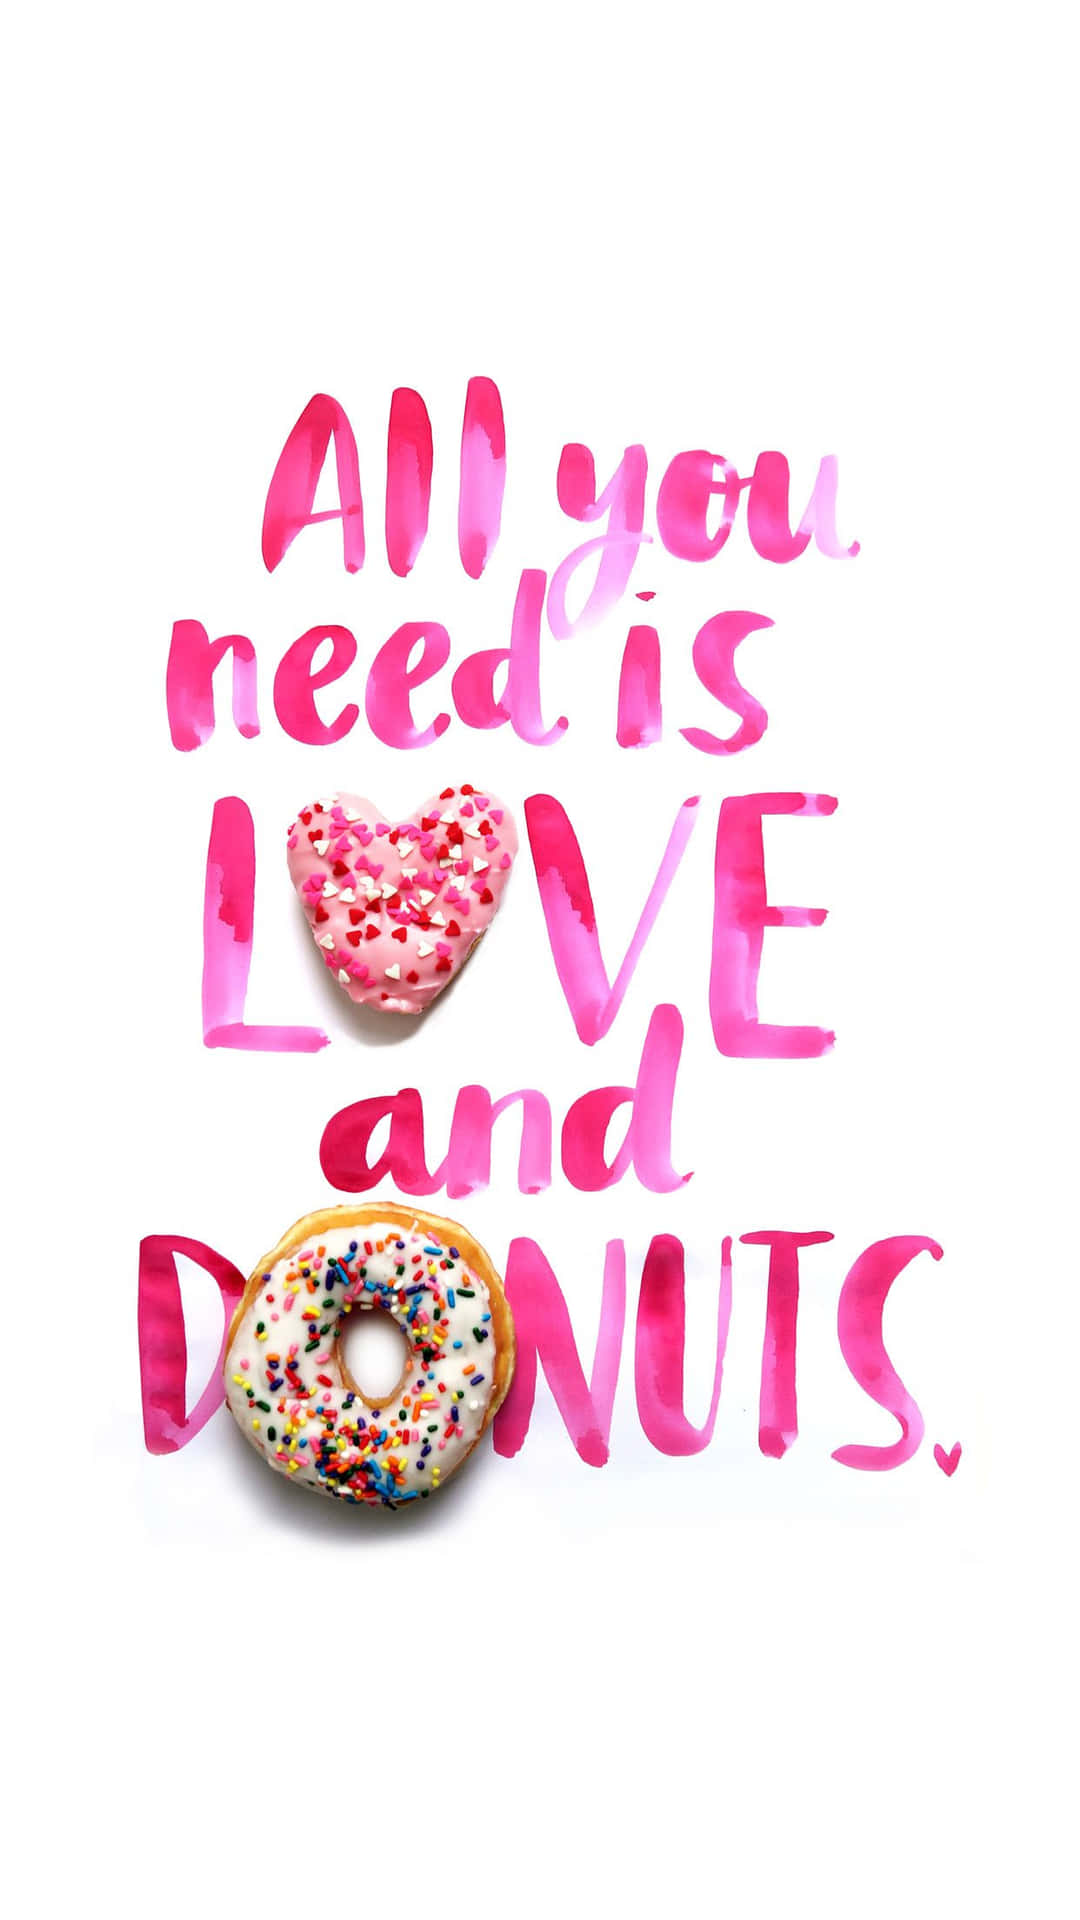 Enjoy a fresh cup of Dunkin Donuts coffee!